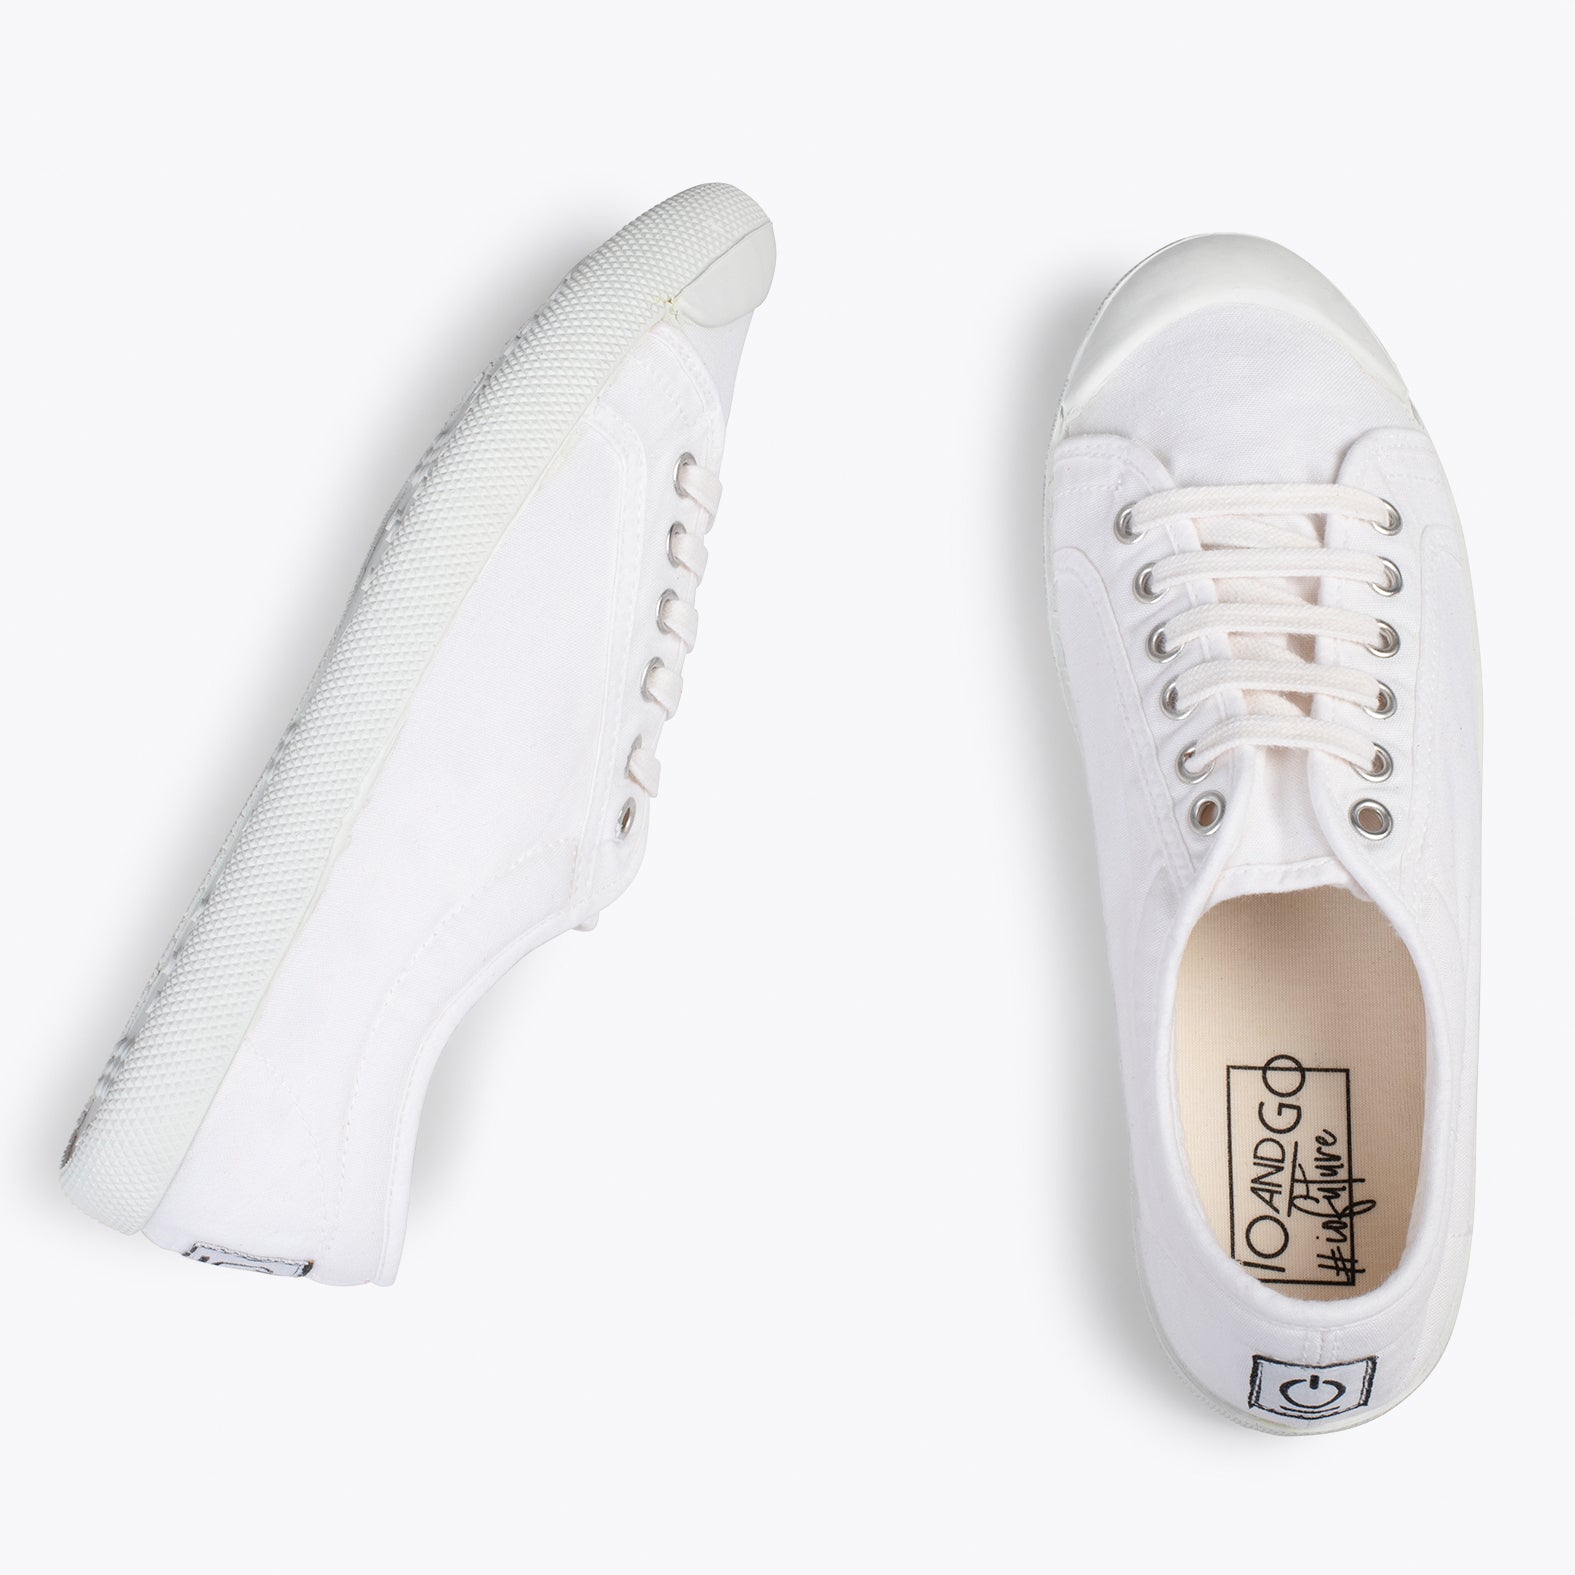 BAOBAB – WHITE BCI cotton sneakers from IO&GO